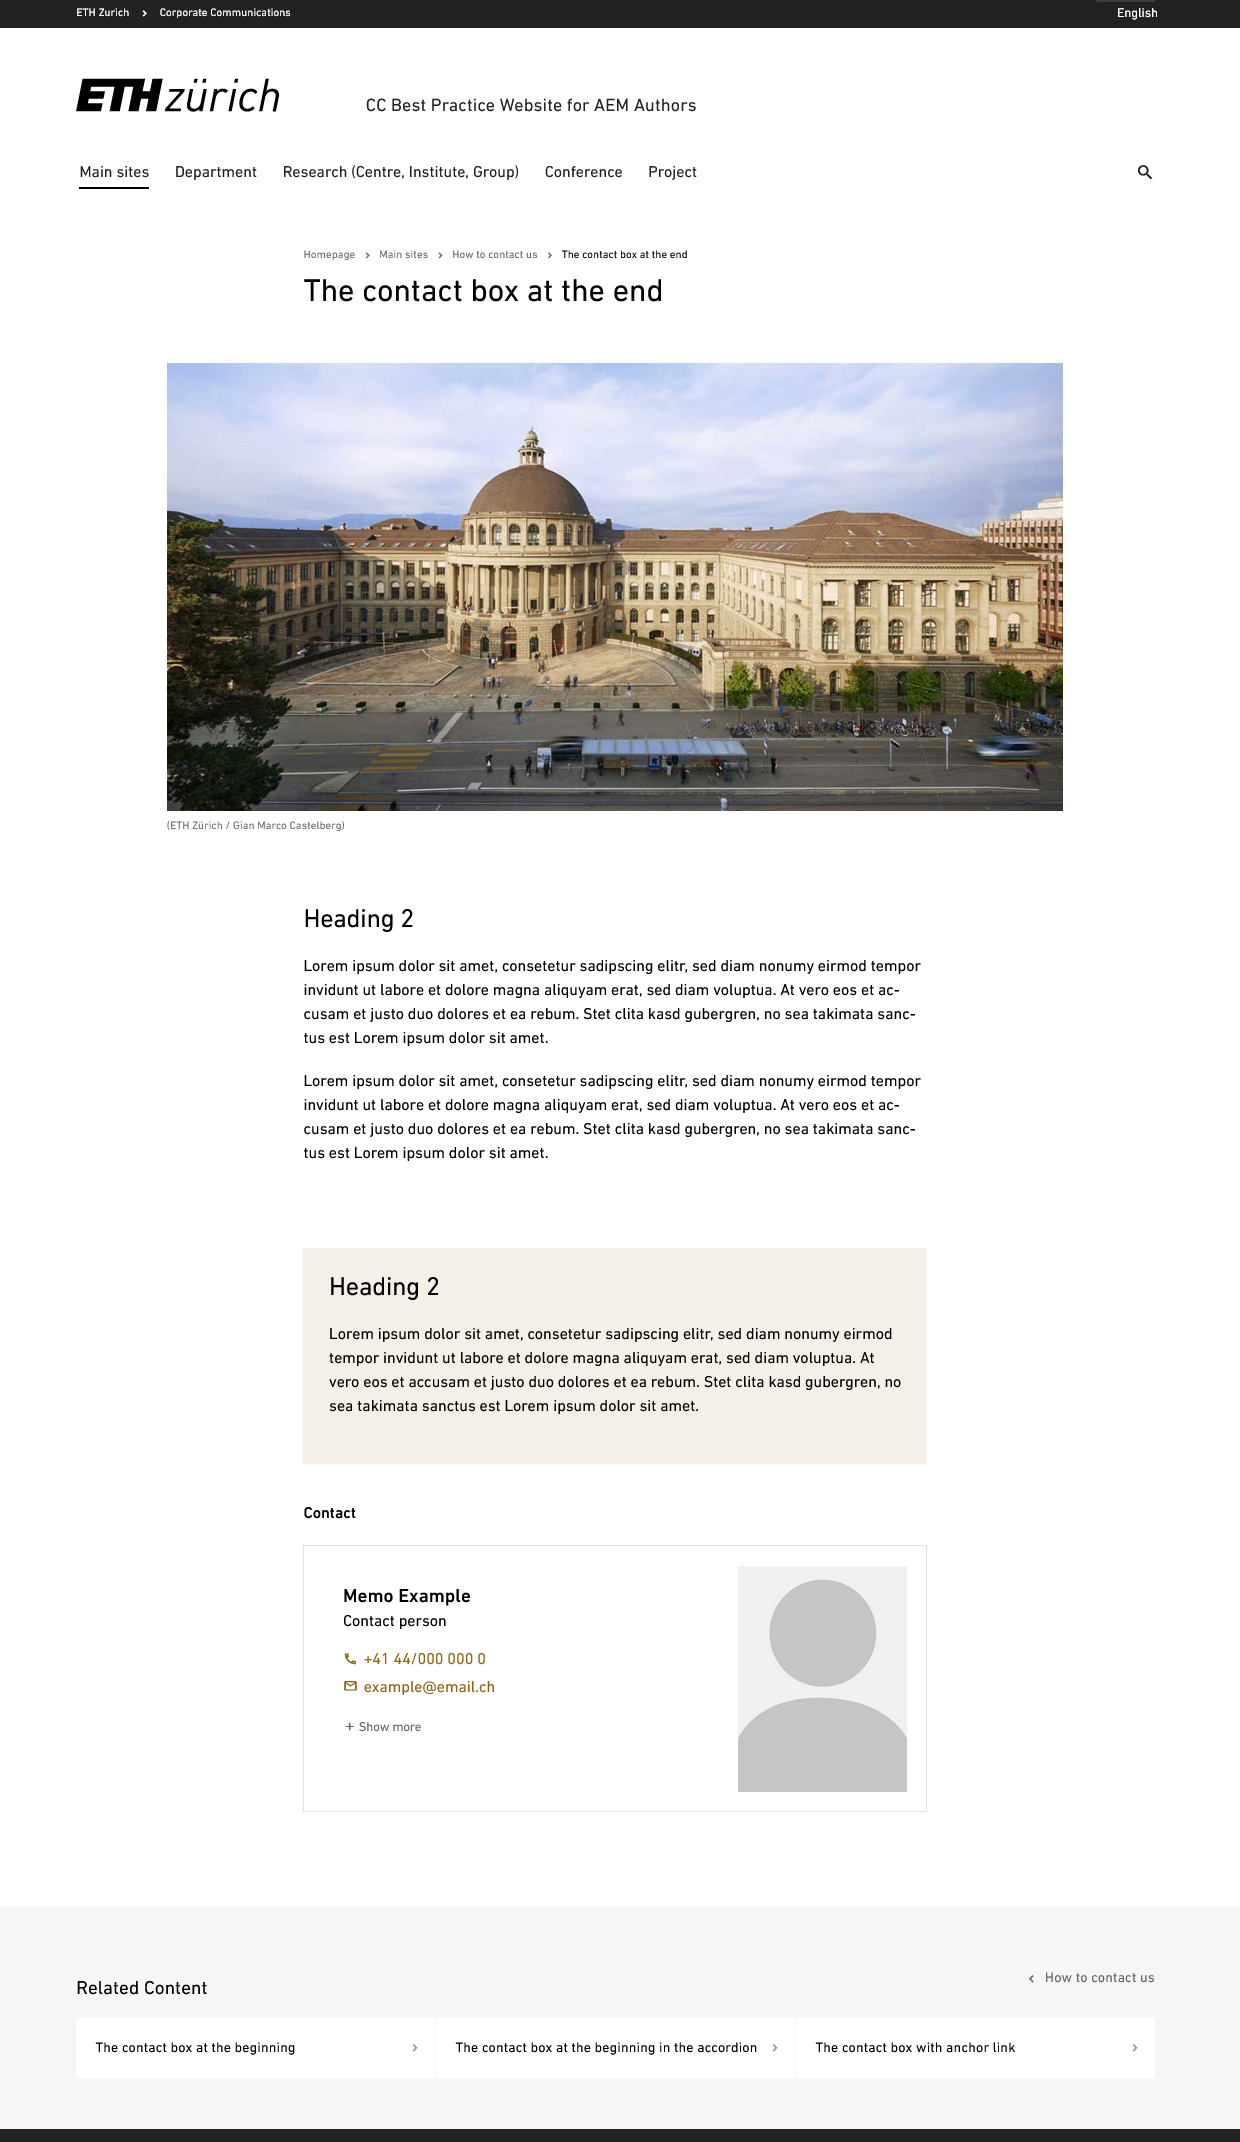 Vergrösserte Ansicht: Screenshot Webpage: contact box at the end